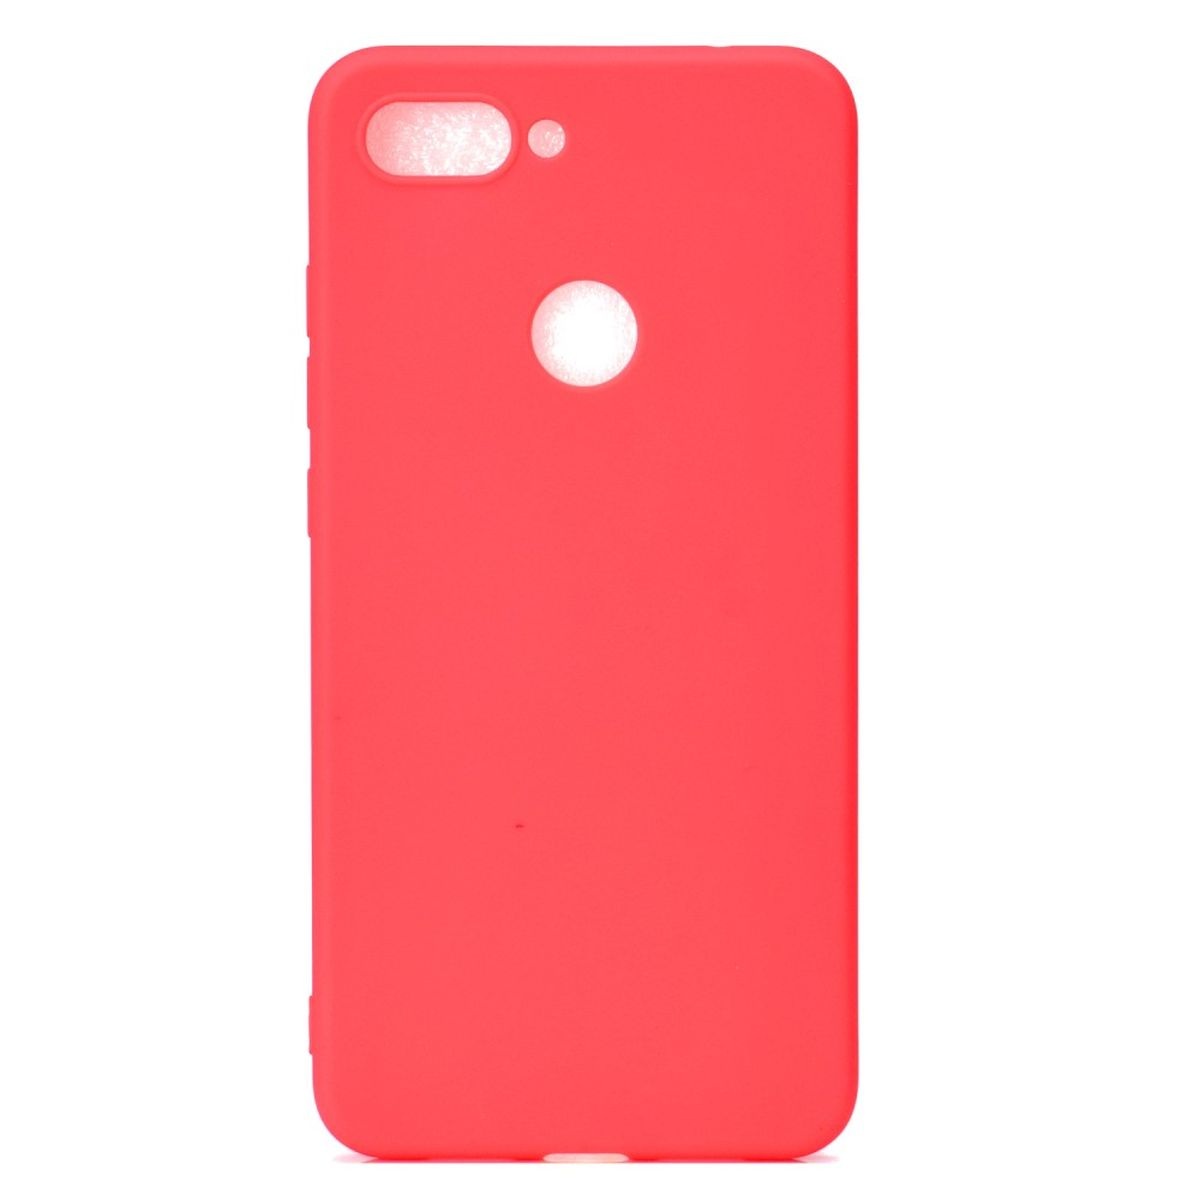 COVERKINGZ Handycase Silikon, Rot Lite, Mi Backcover, 8 Xiaomi, aus